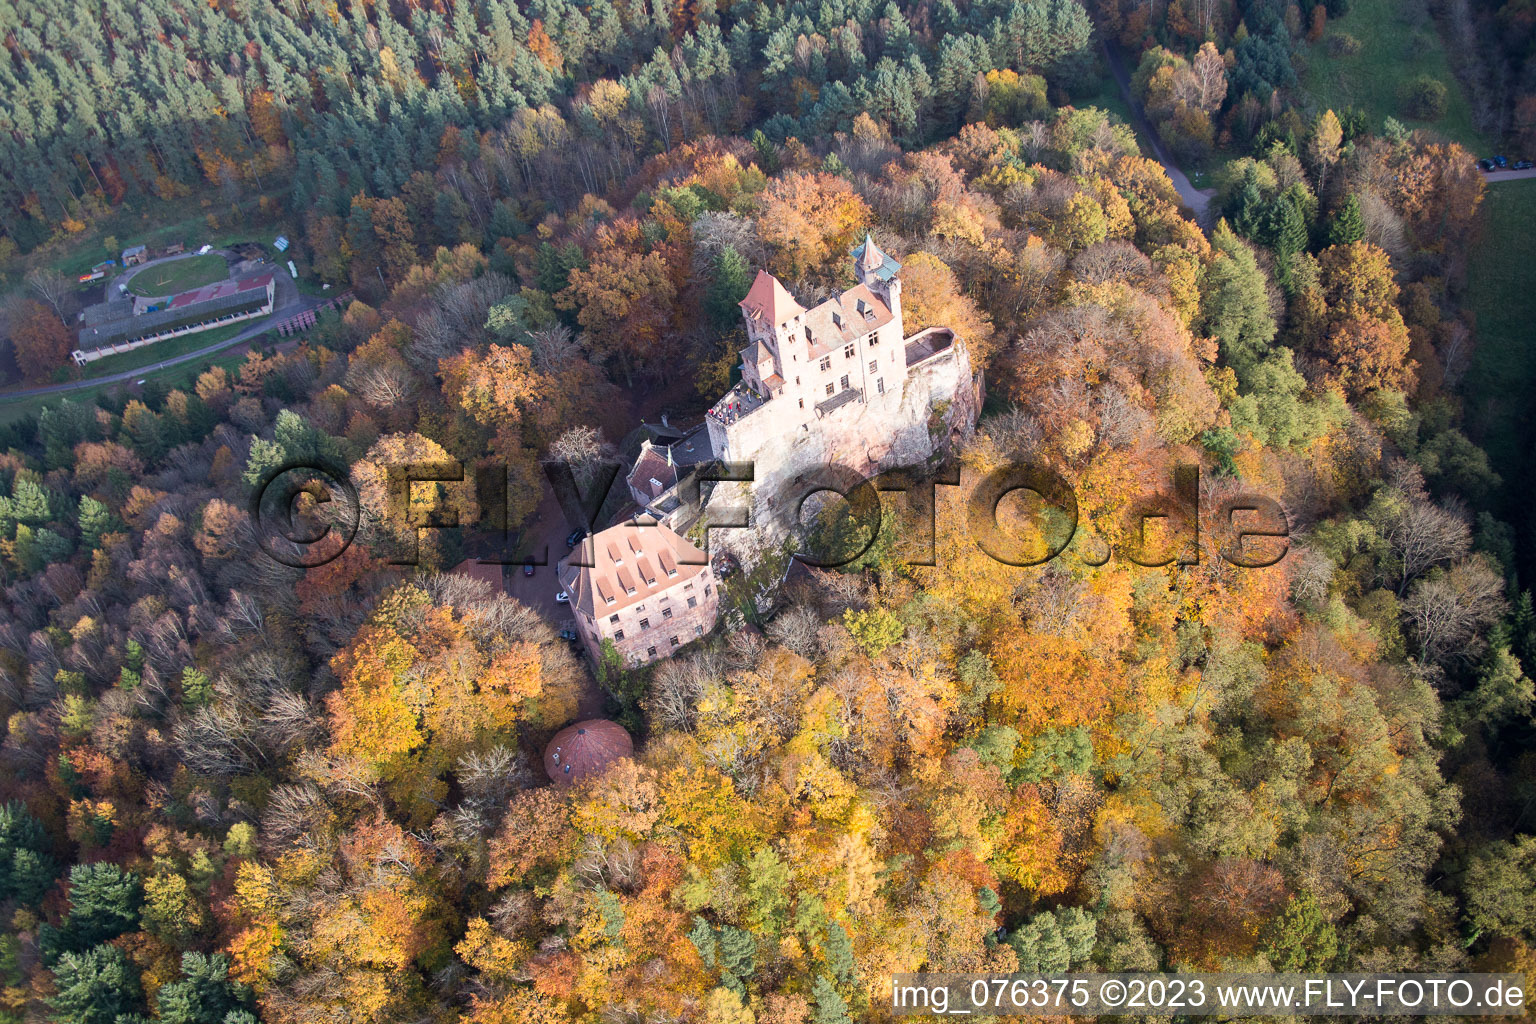 Erlenbach, Berwartstein Castle in Erlenbach bei Dahn in the state Rhineland-Palatinate, Germany from the plane